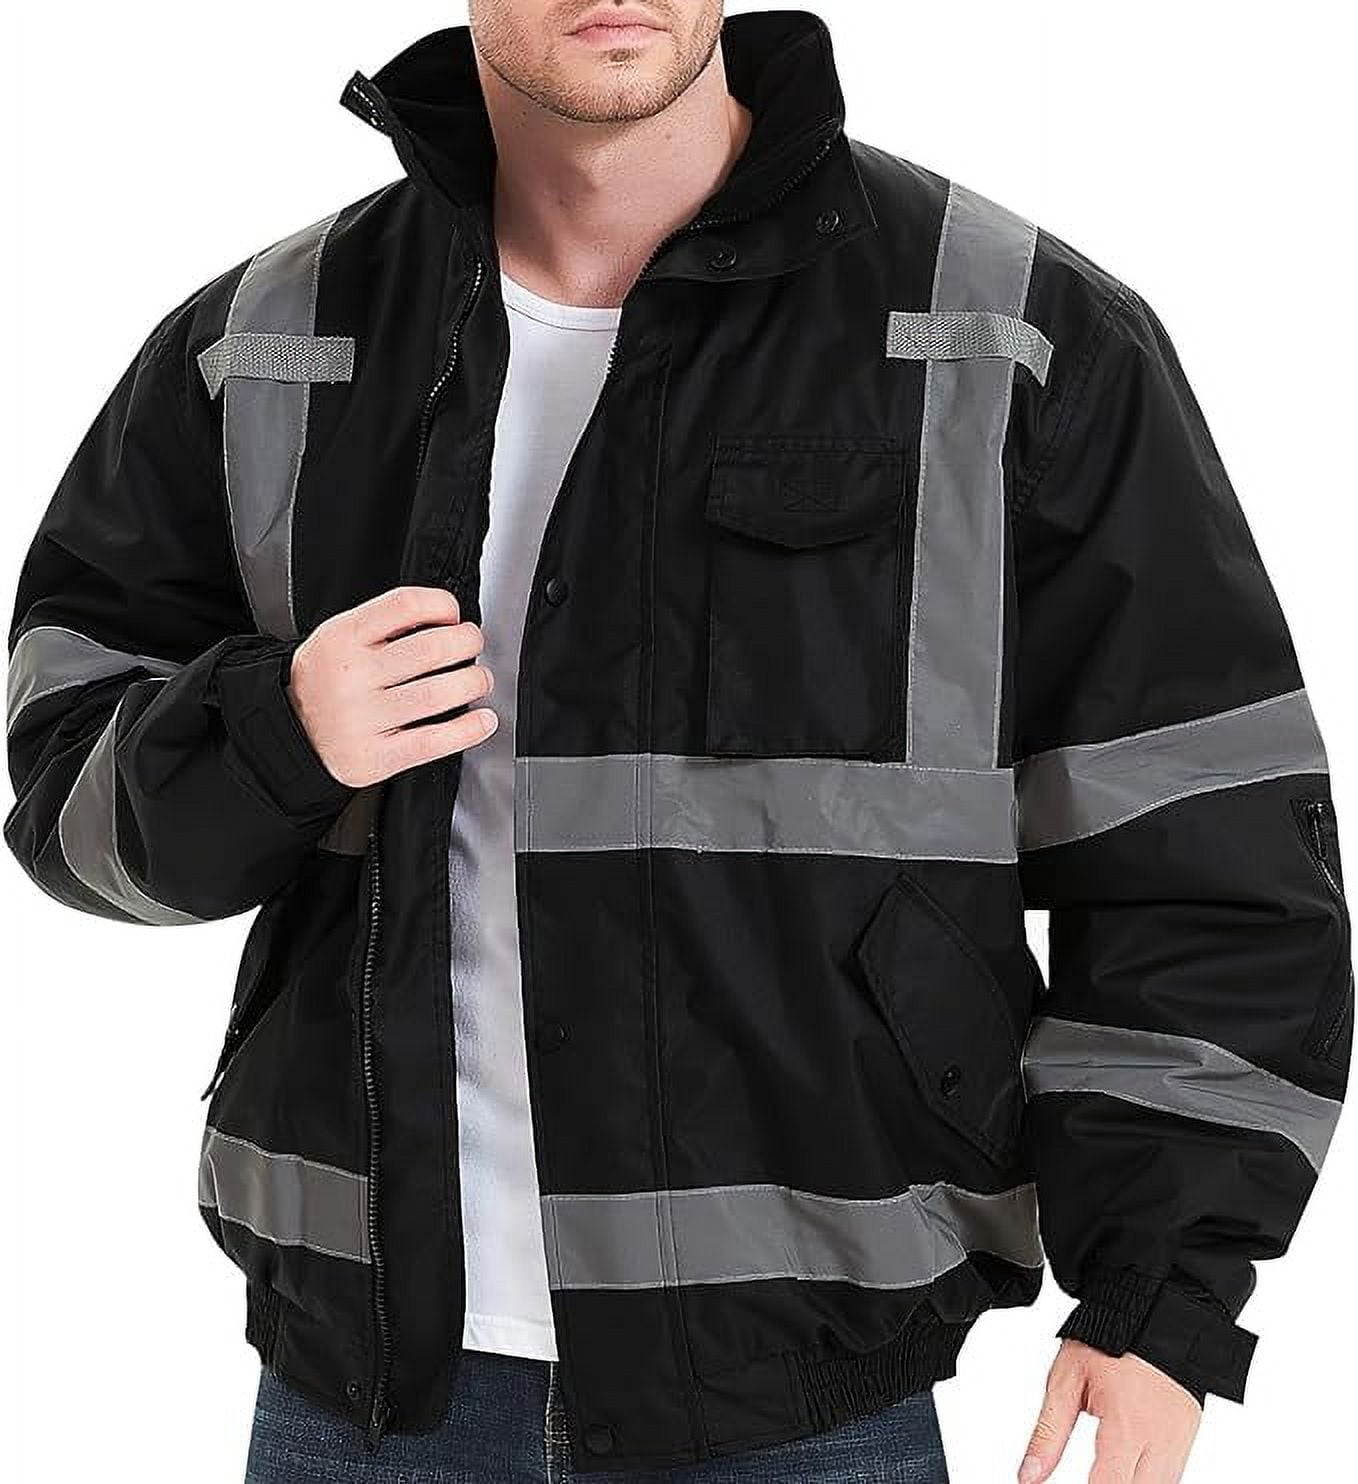 ProtectX High Visibility Safety Waterproof Bomber Jacket for Men, Hi Vis  Reflective Winter Construction Jacket, Black, Medium